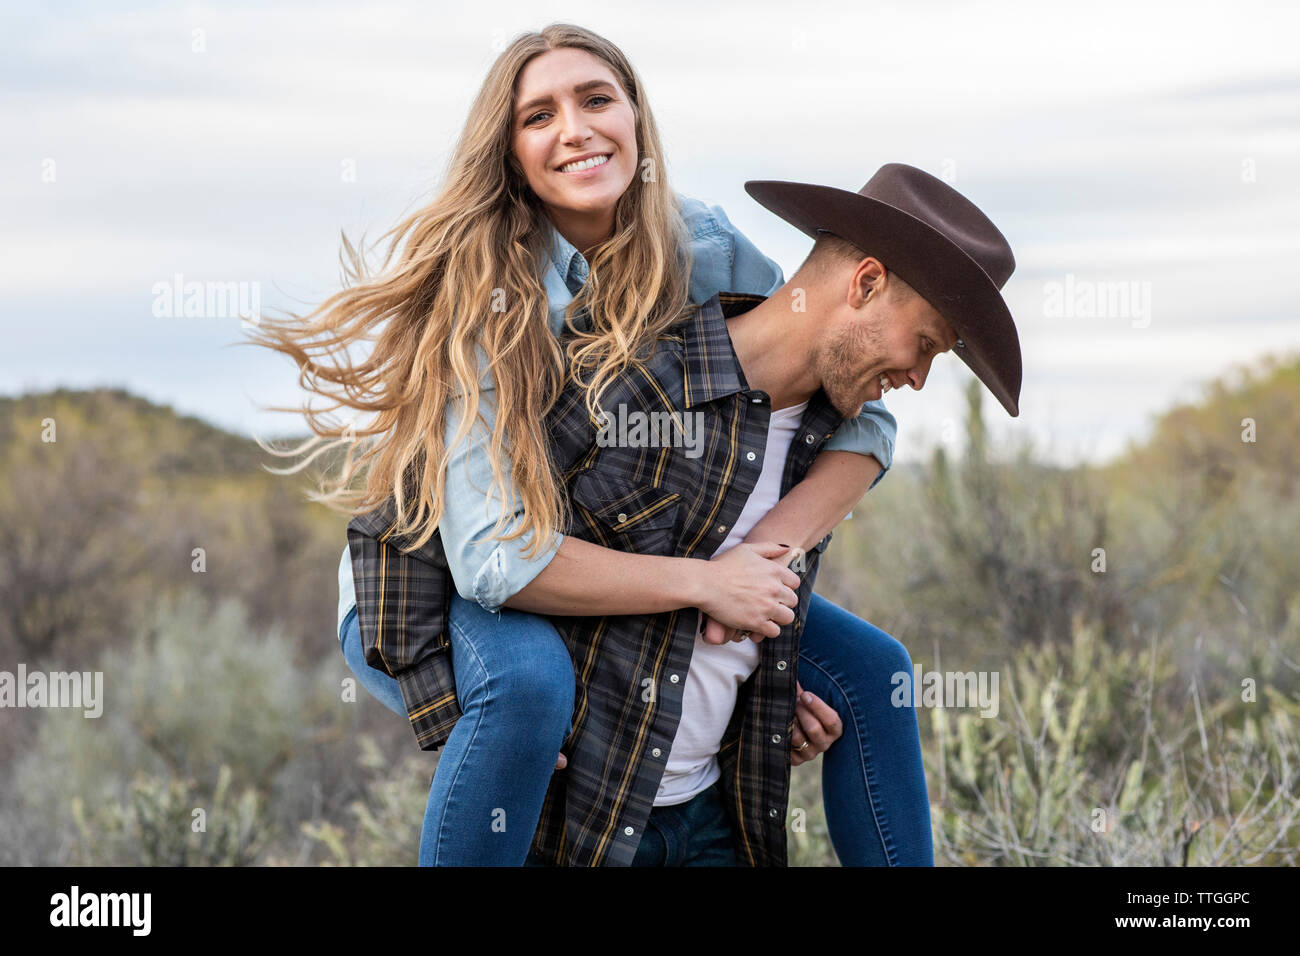 Western Wear pareja joven dando piggy back paseo en Rancho Foto de stock